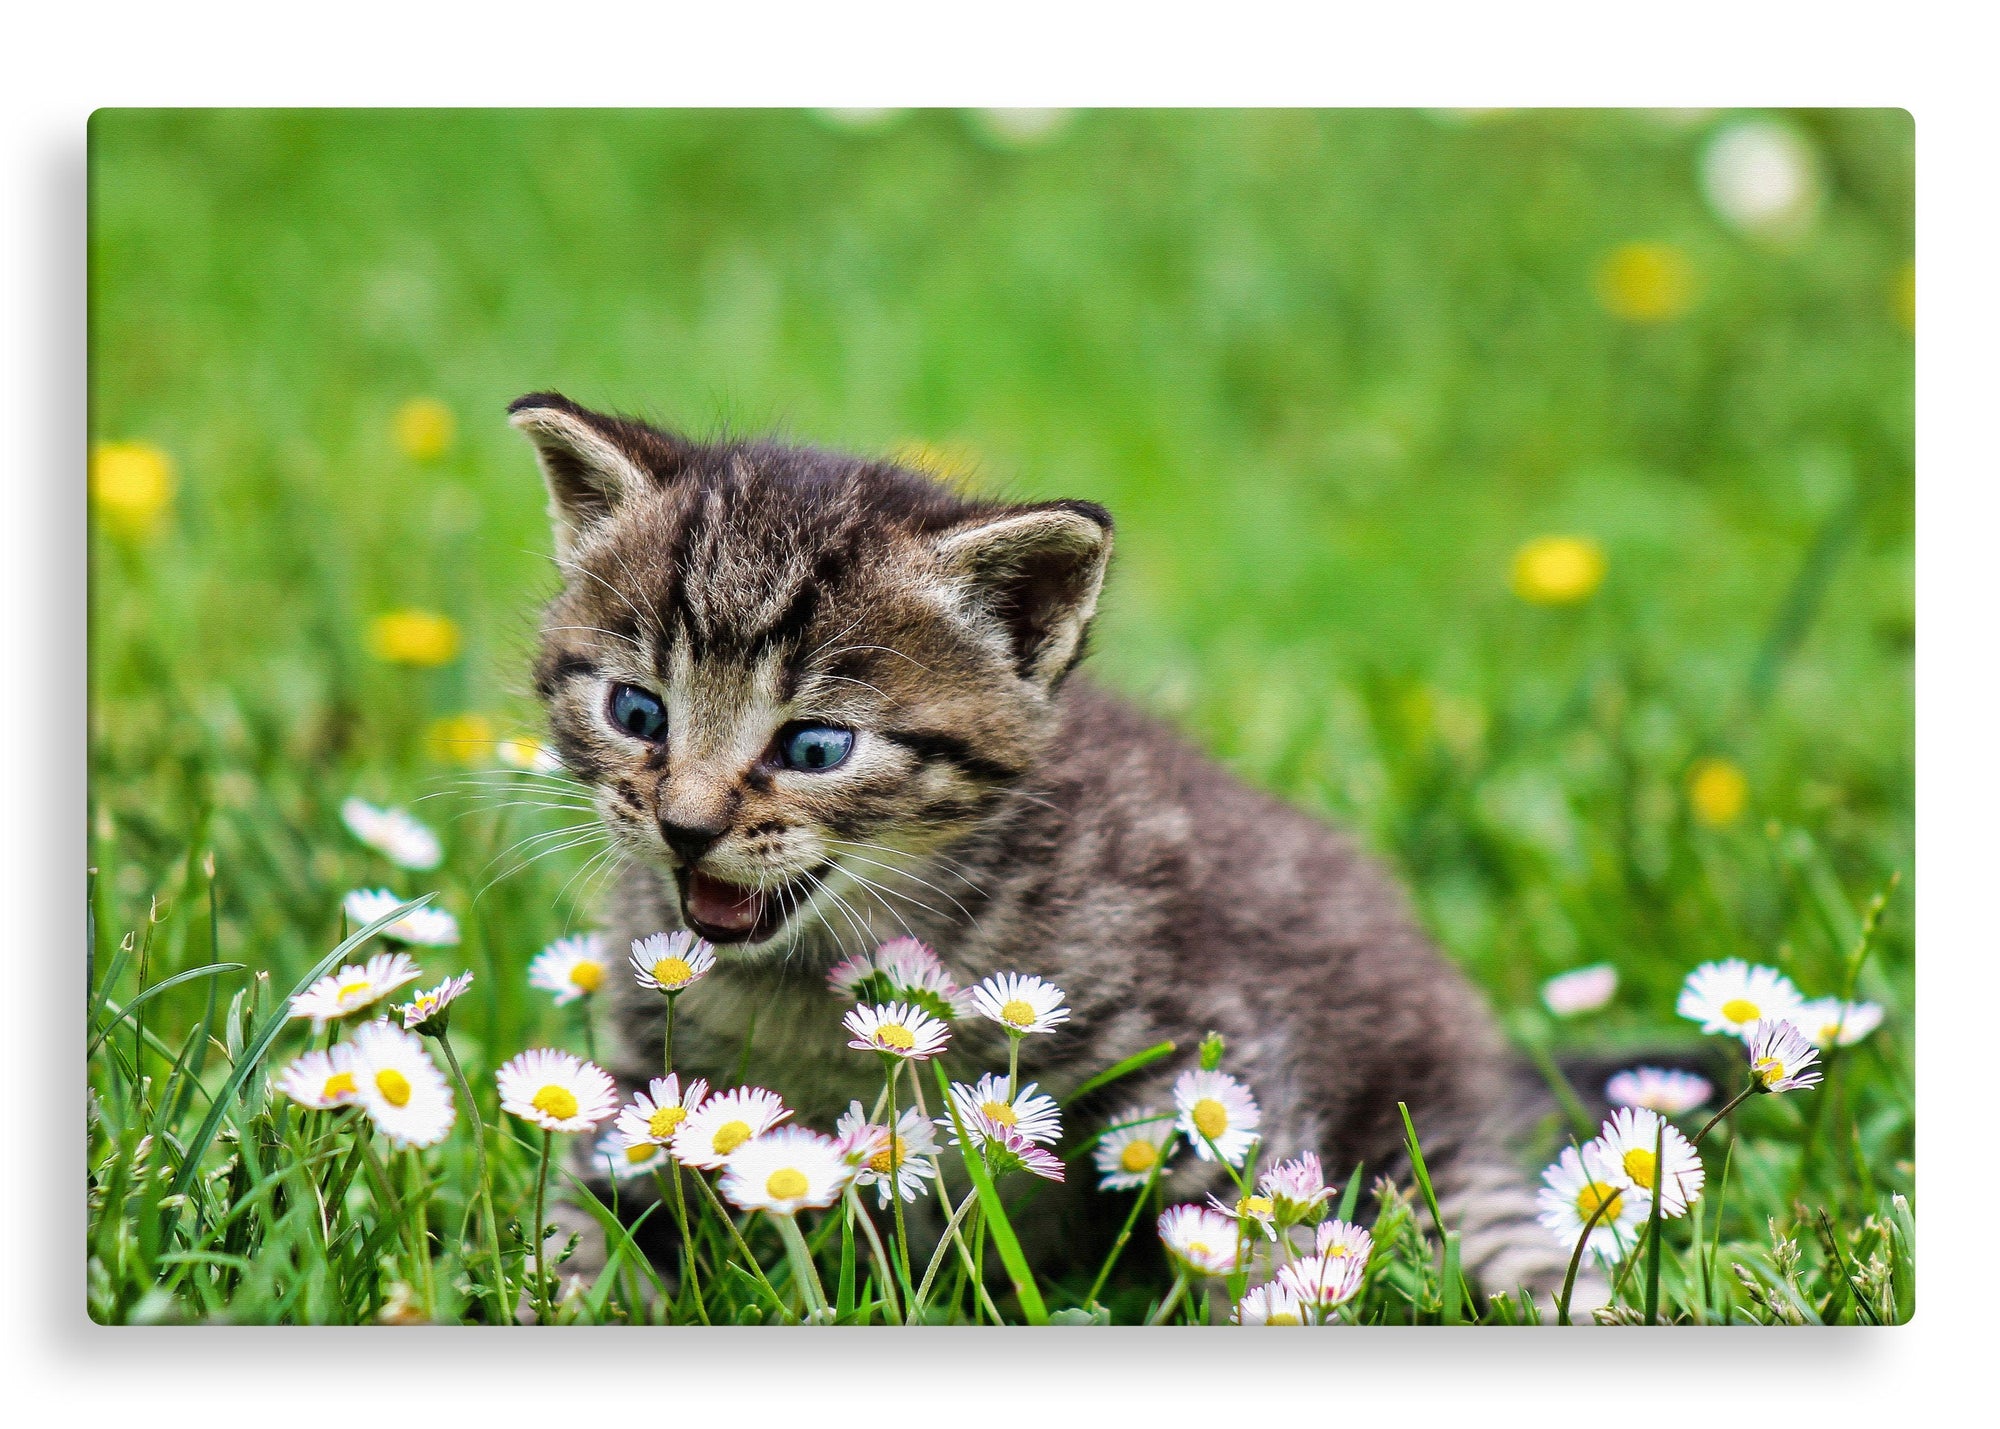 Kitten with Flowers